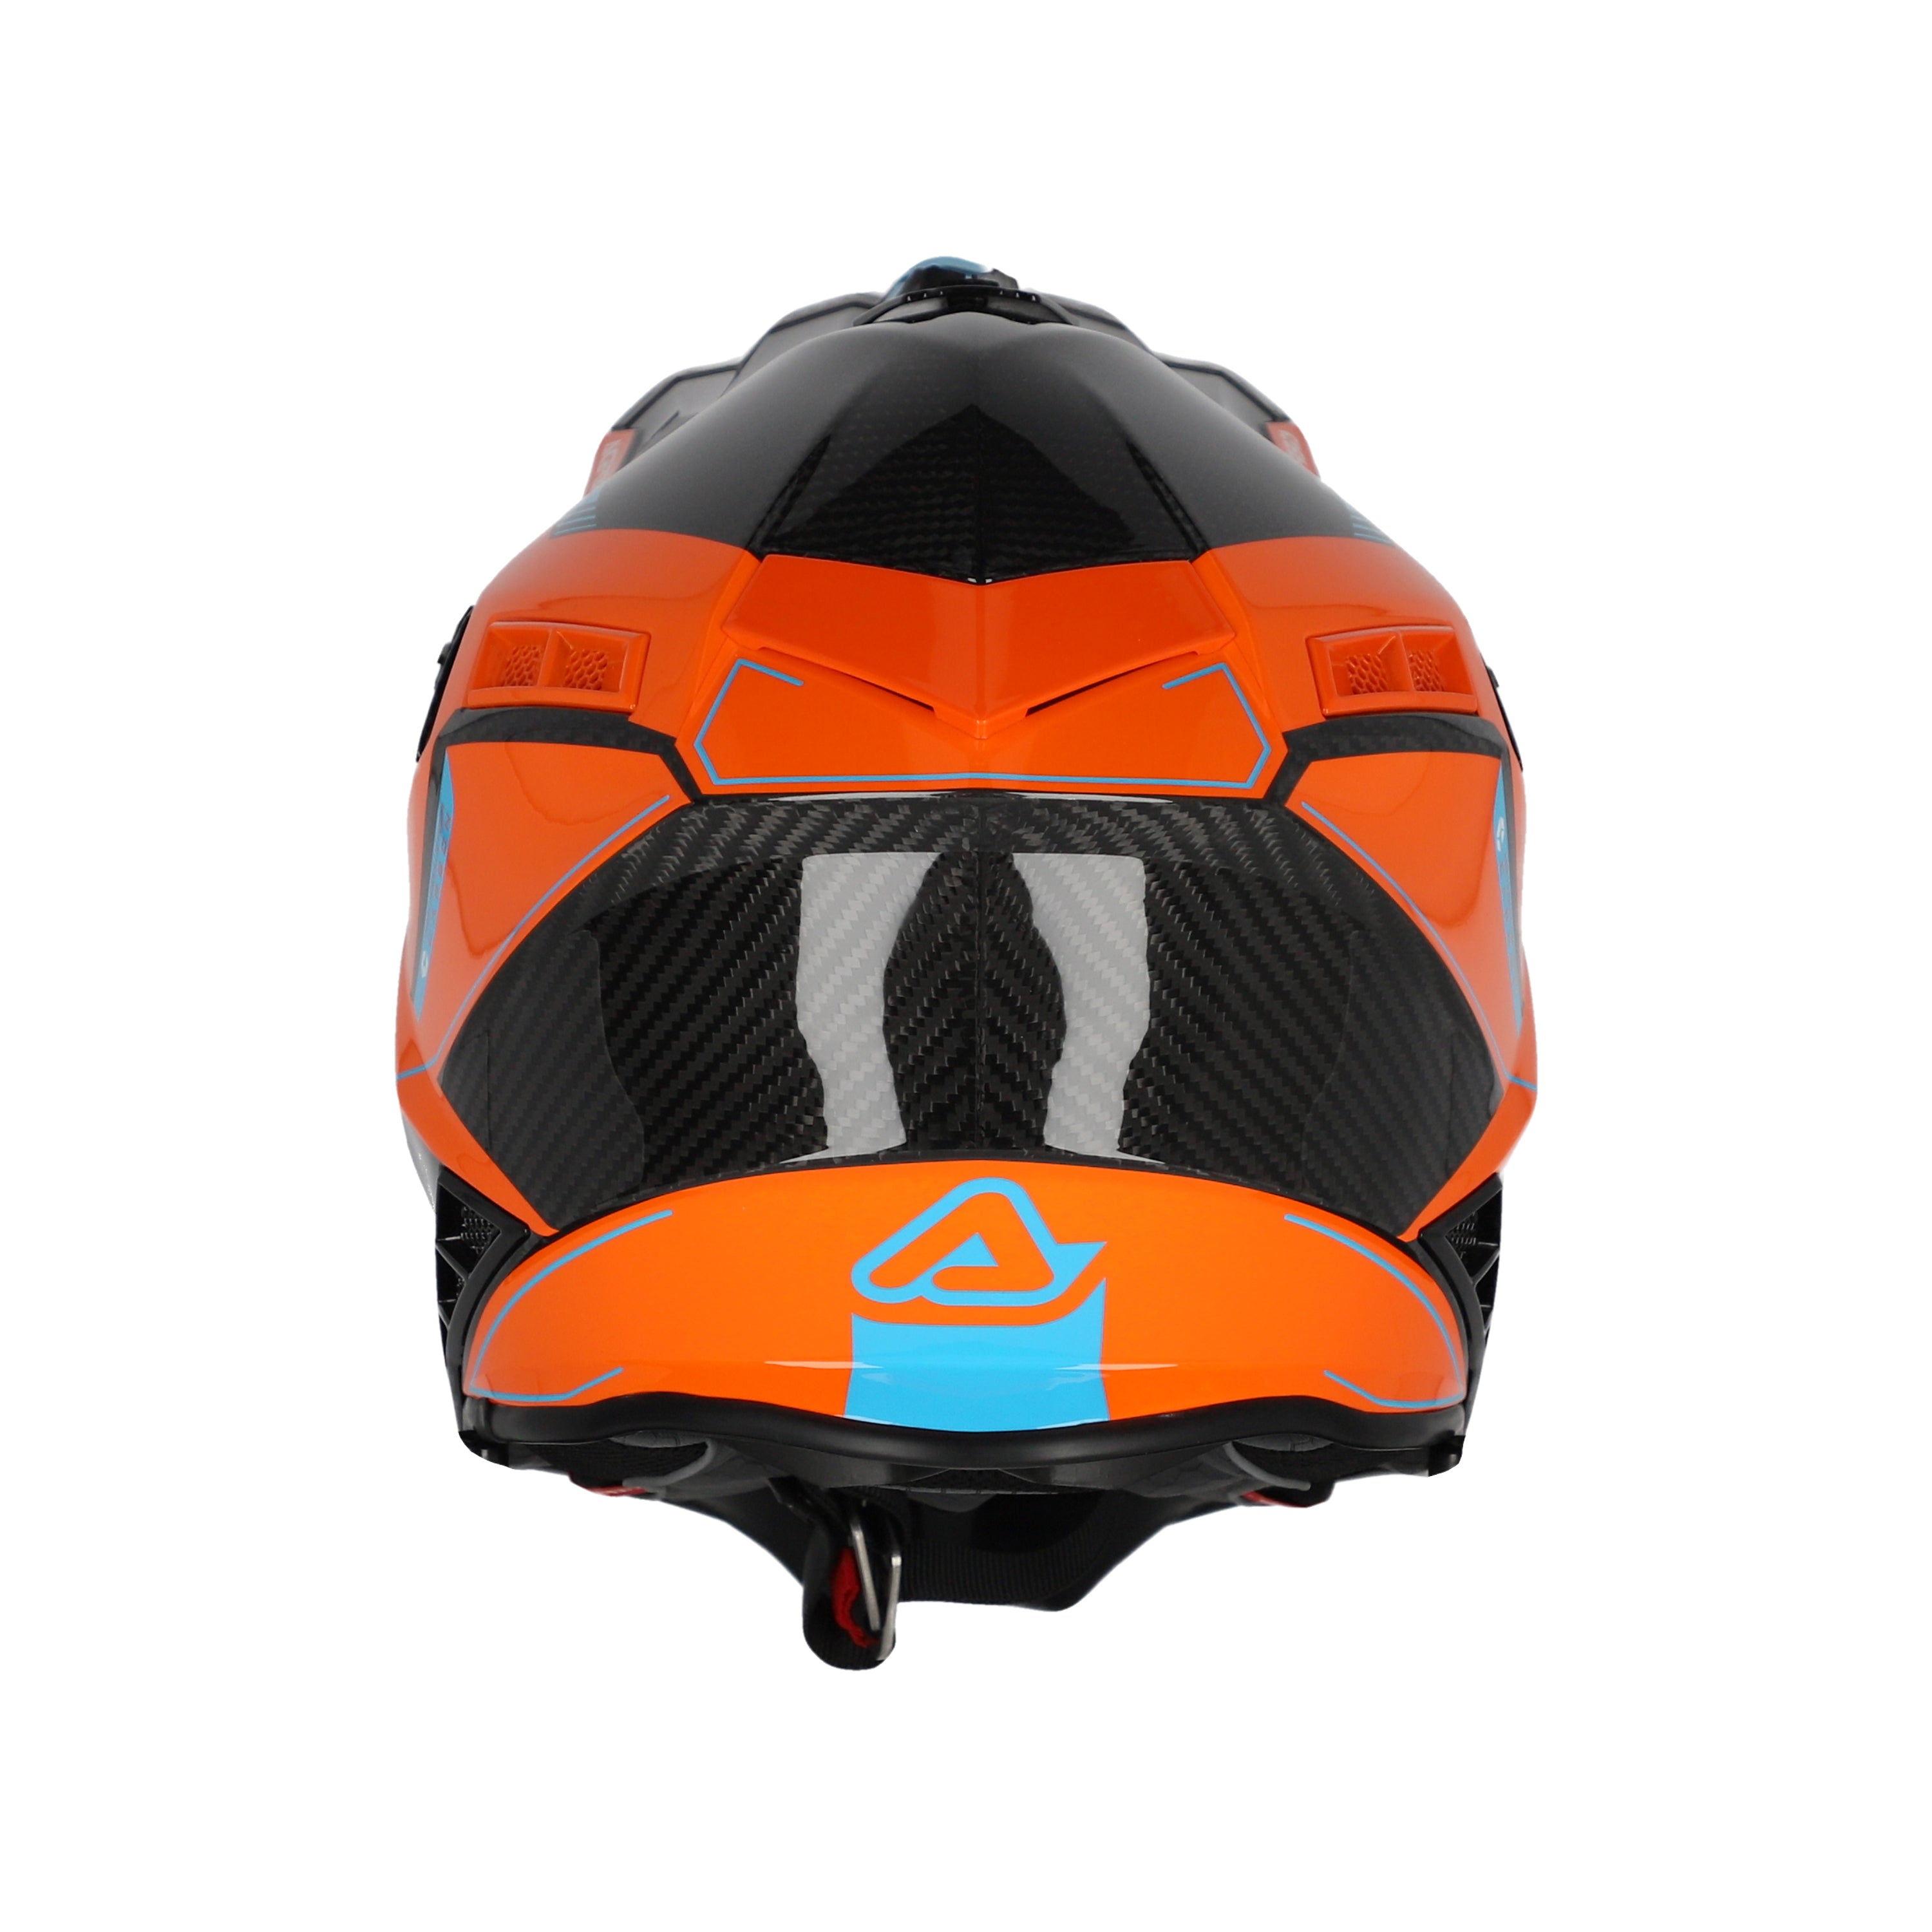 Acerbis Steel Carbon MX Helmet Glossy Orange/Black